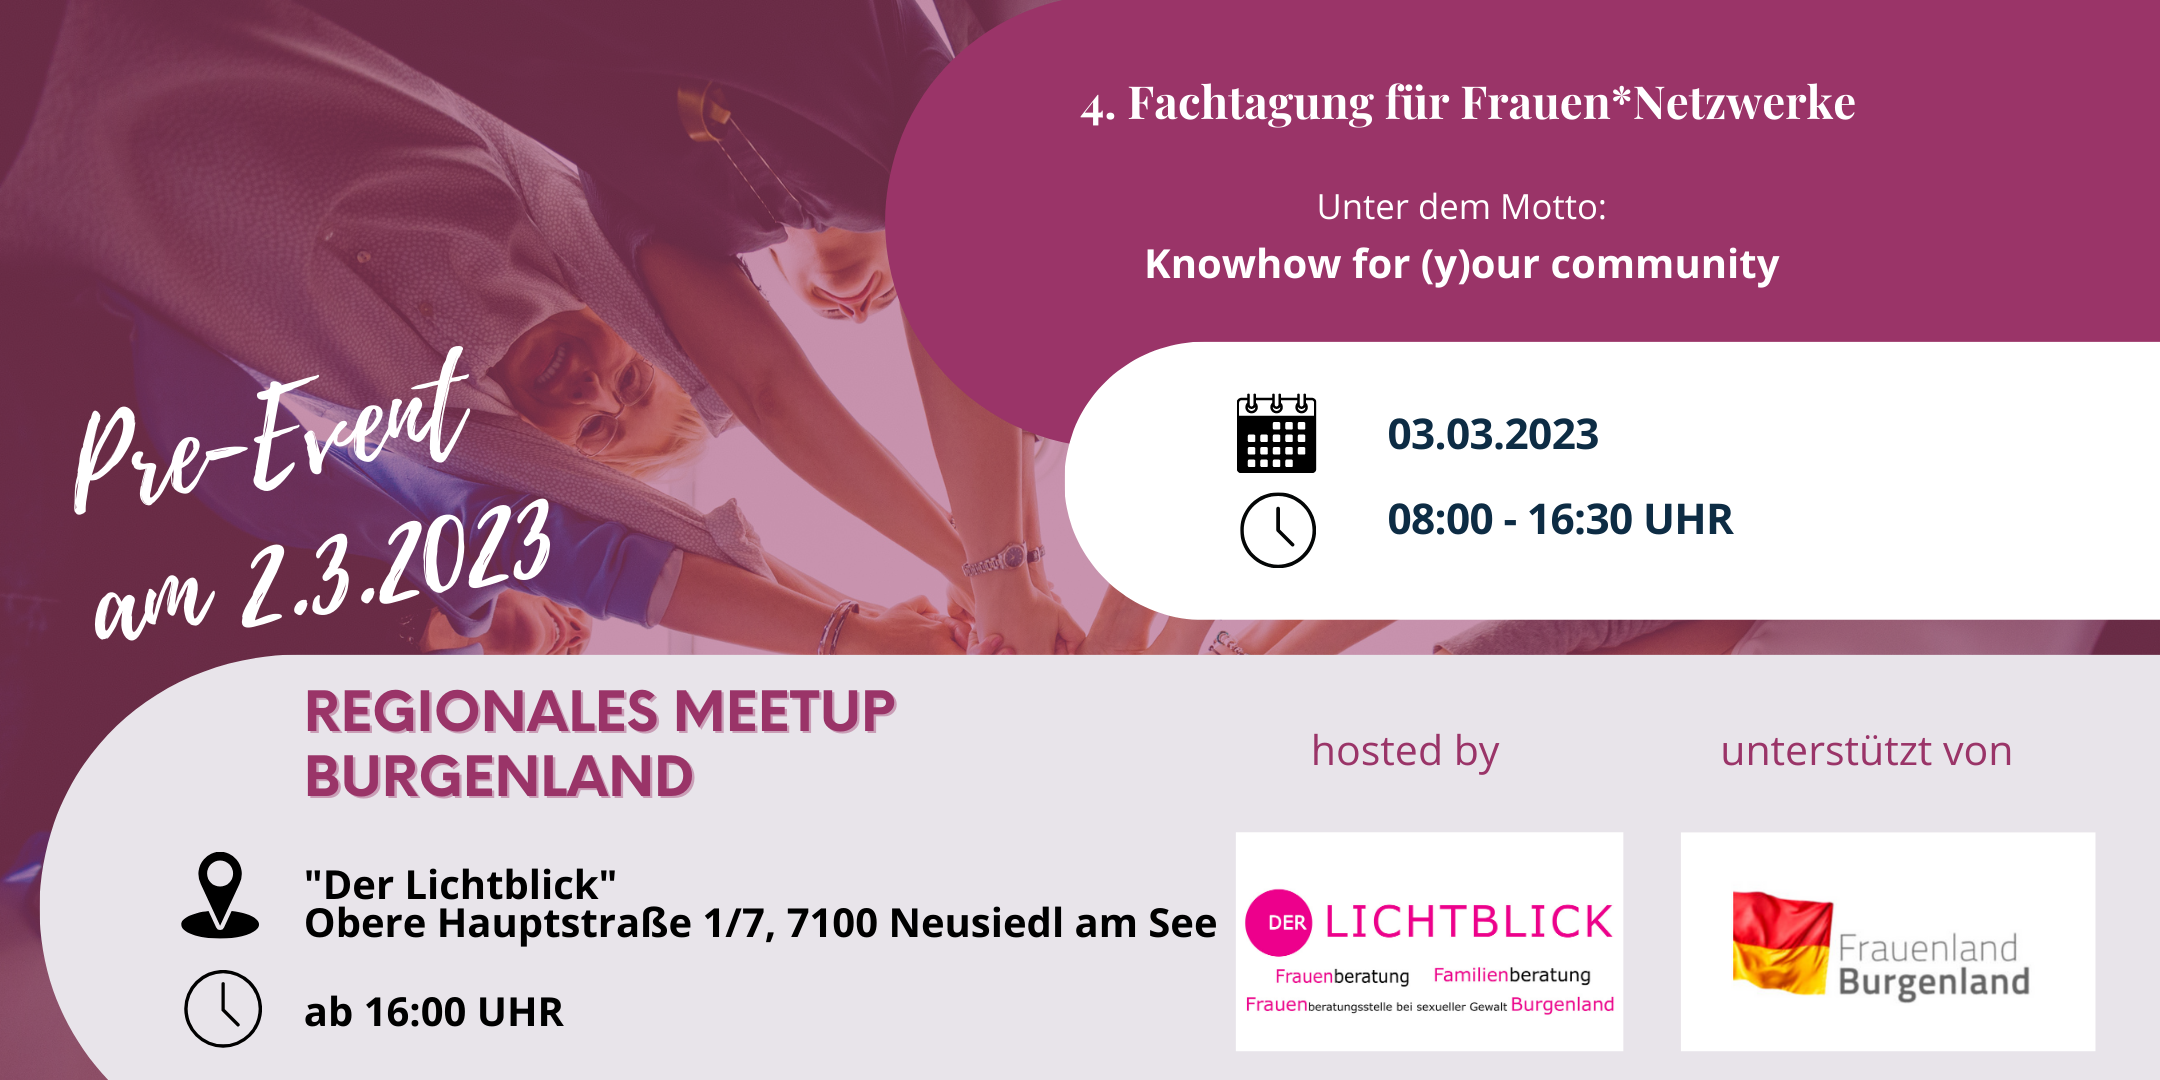 meetup_pre event_Burgenland